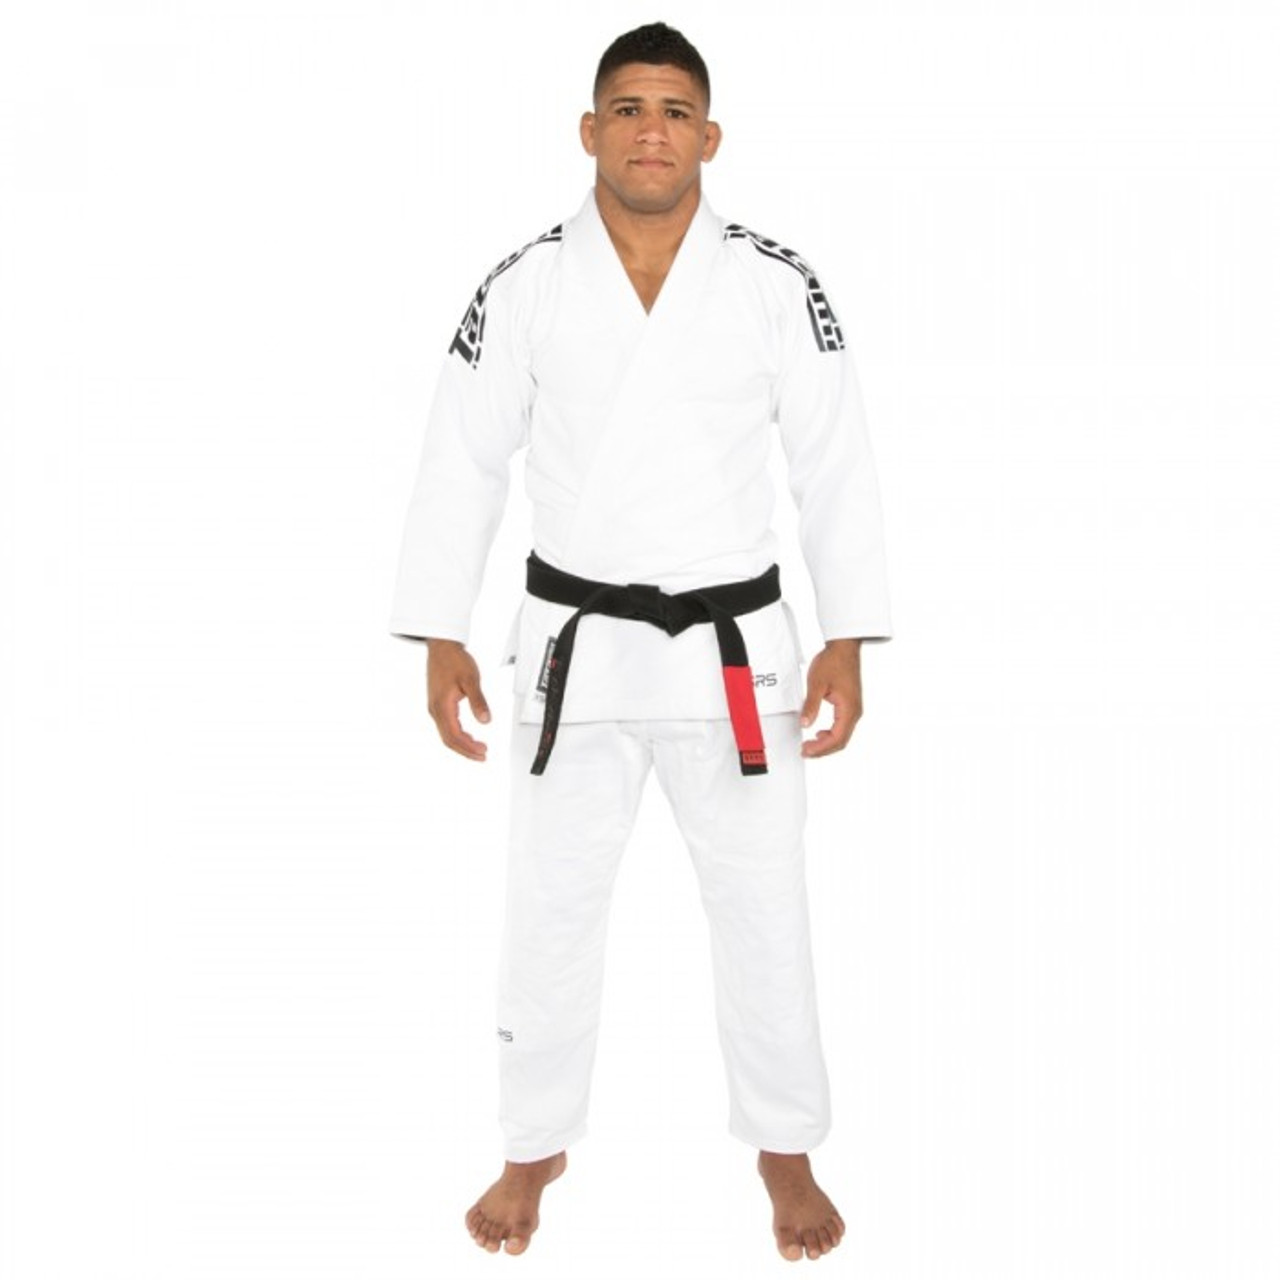 Tatami Comp SRS 2.0 BJJ Gi Premium Jiu Jitsu Suit Lightweight Uniform Mens Black 